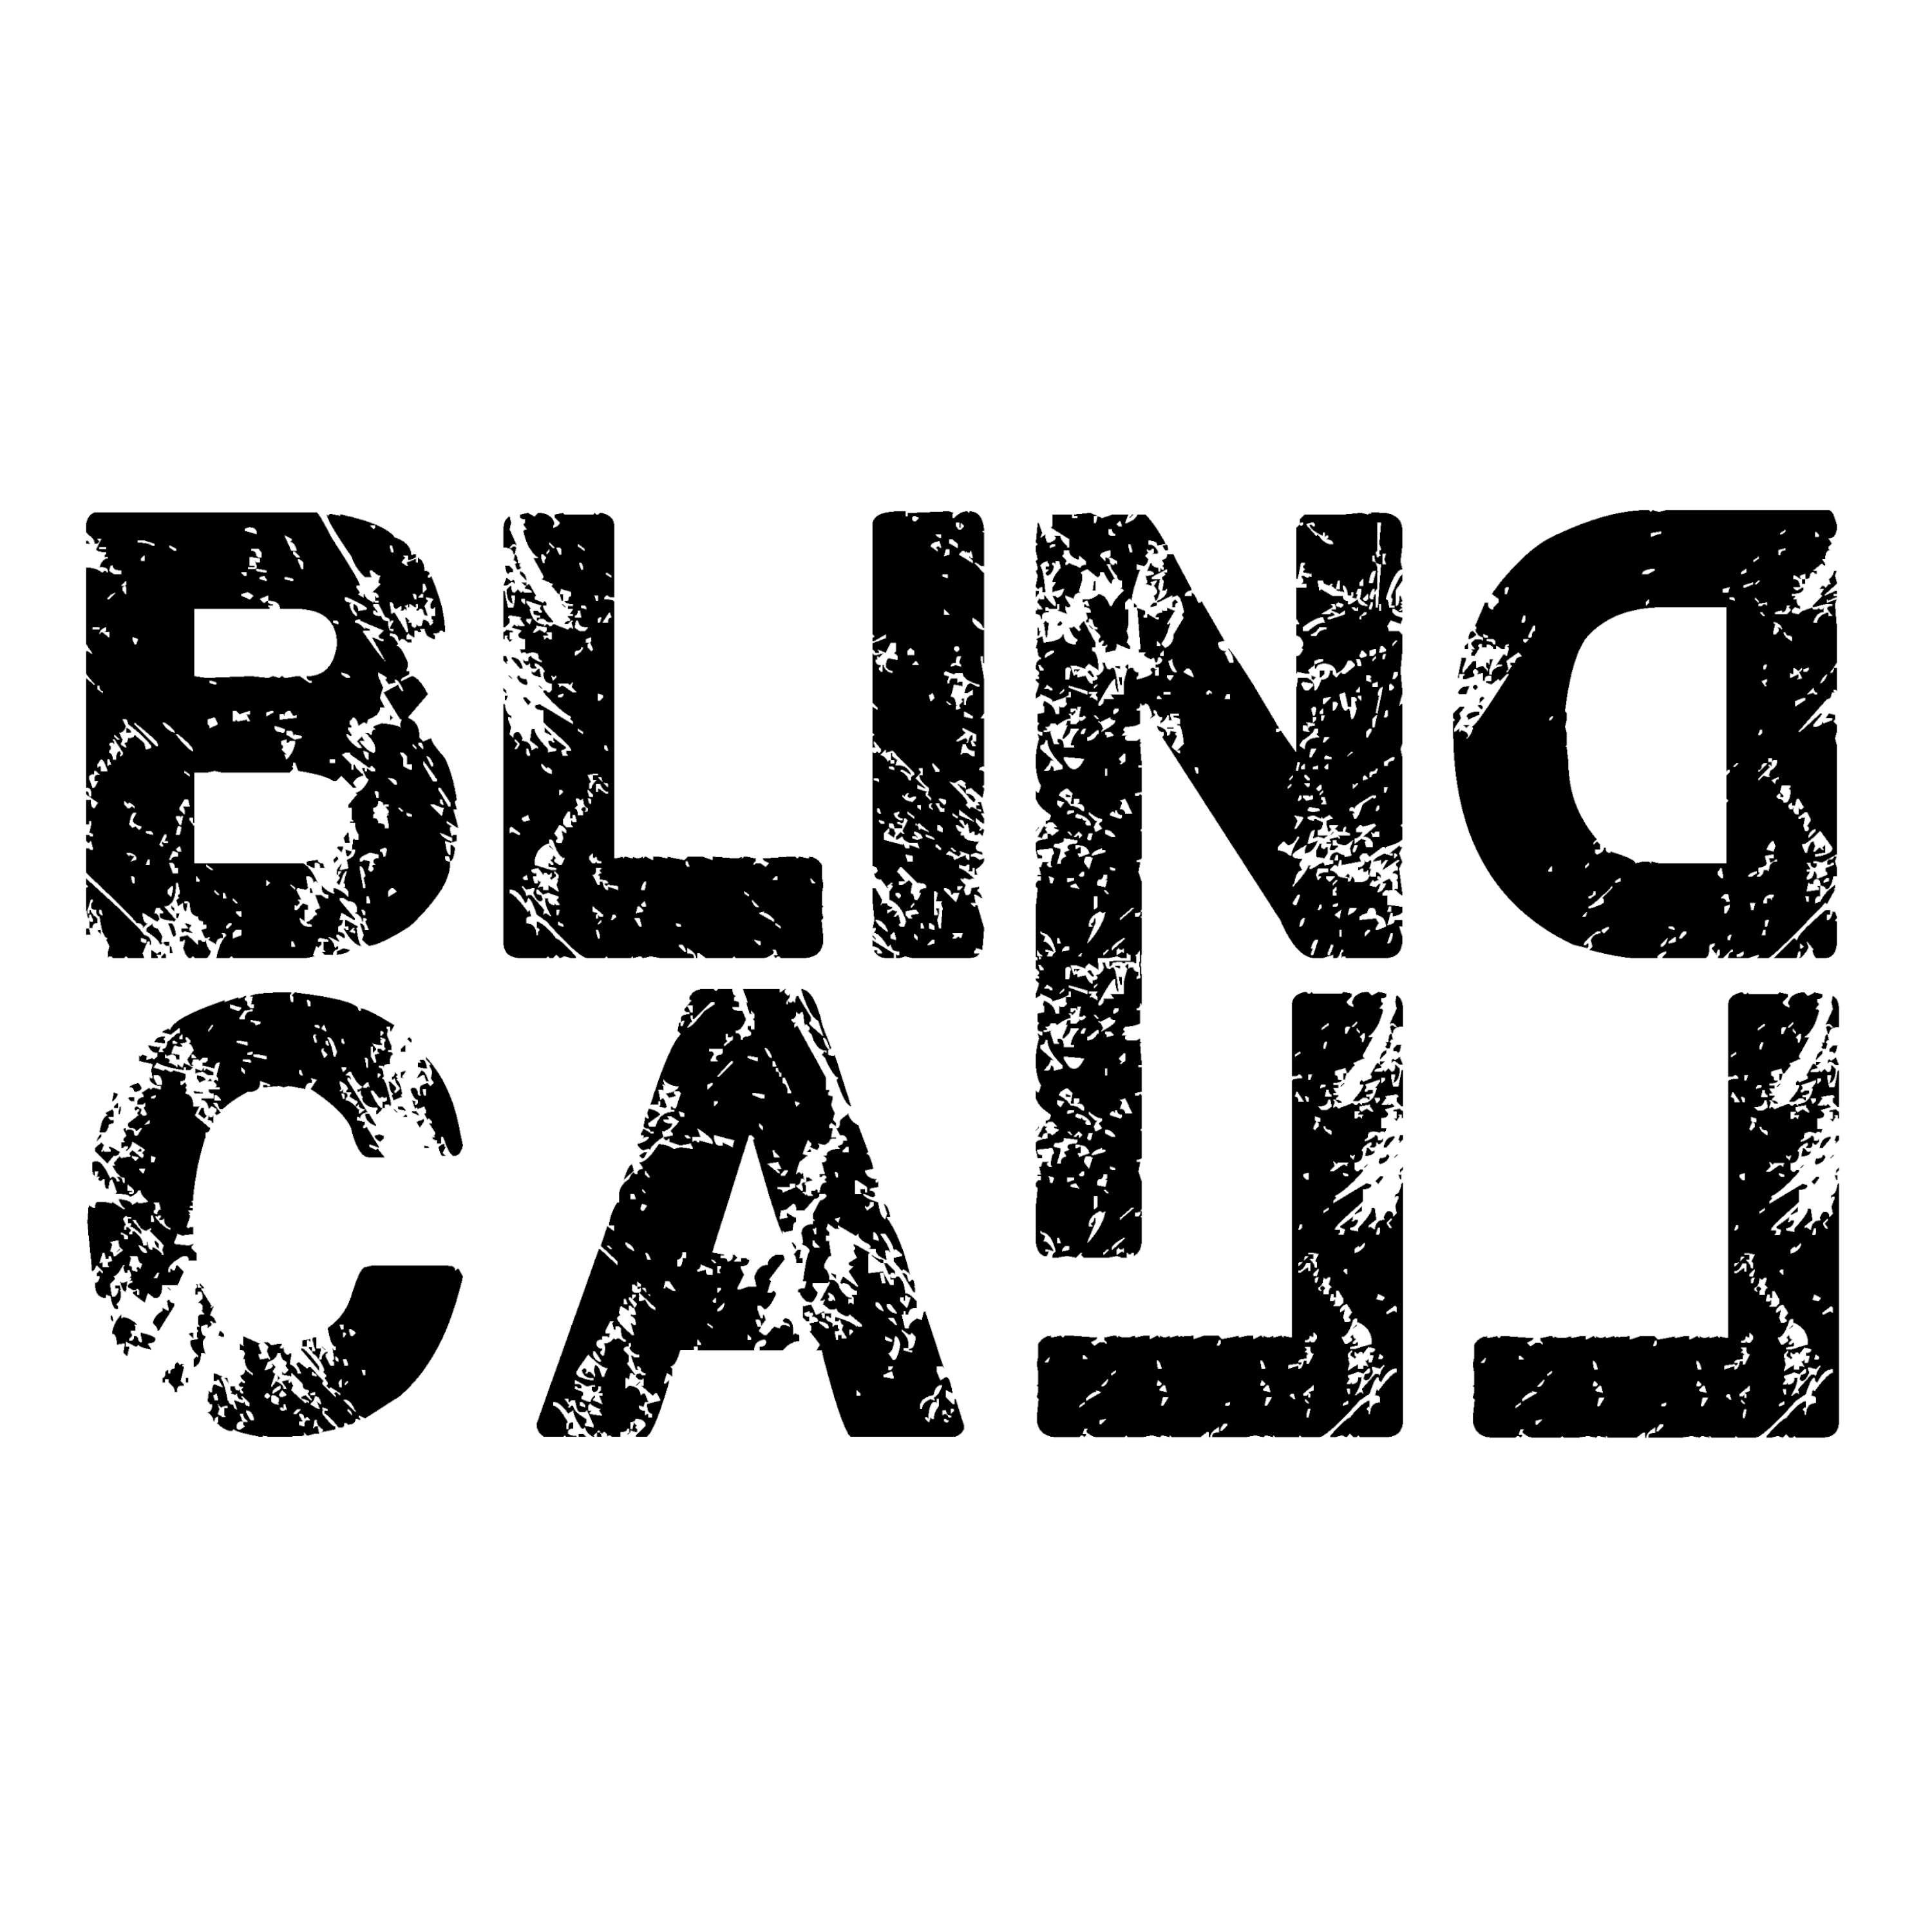 Blind Call